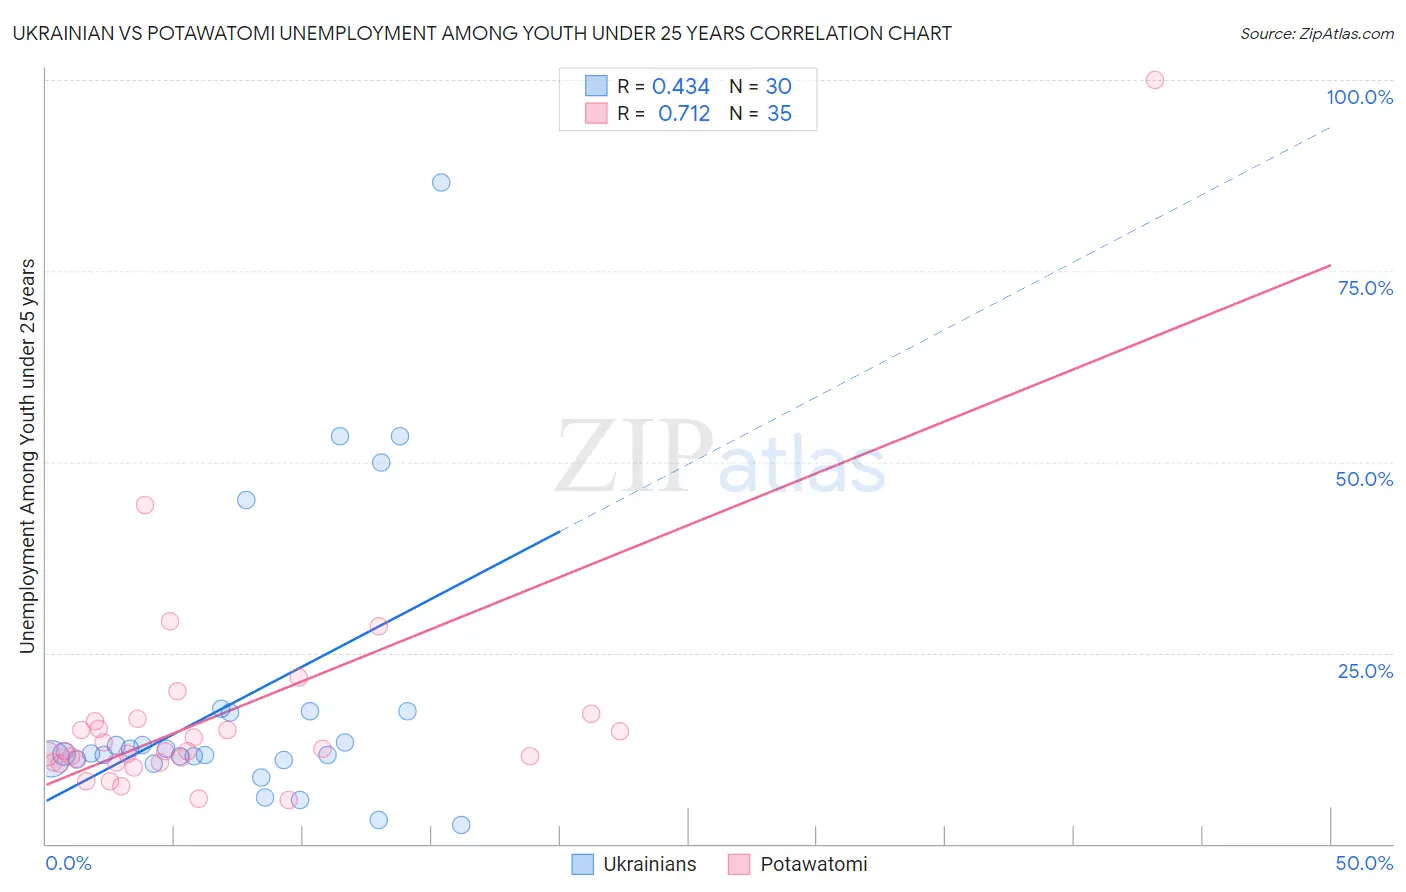 Ukrainian vs Potawatomi Unemployment Among Youth under 25 years